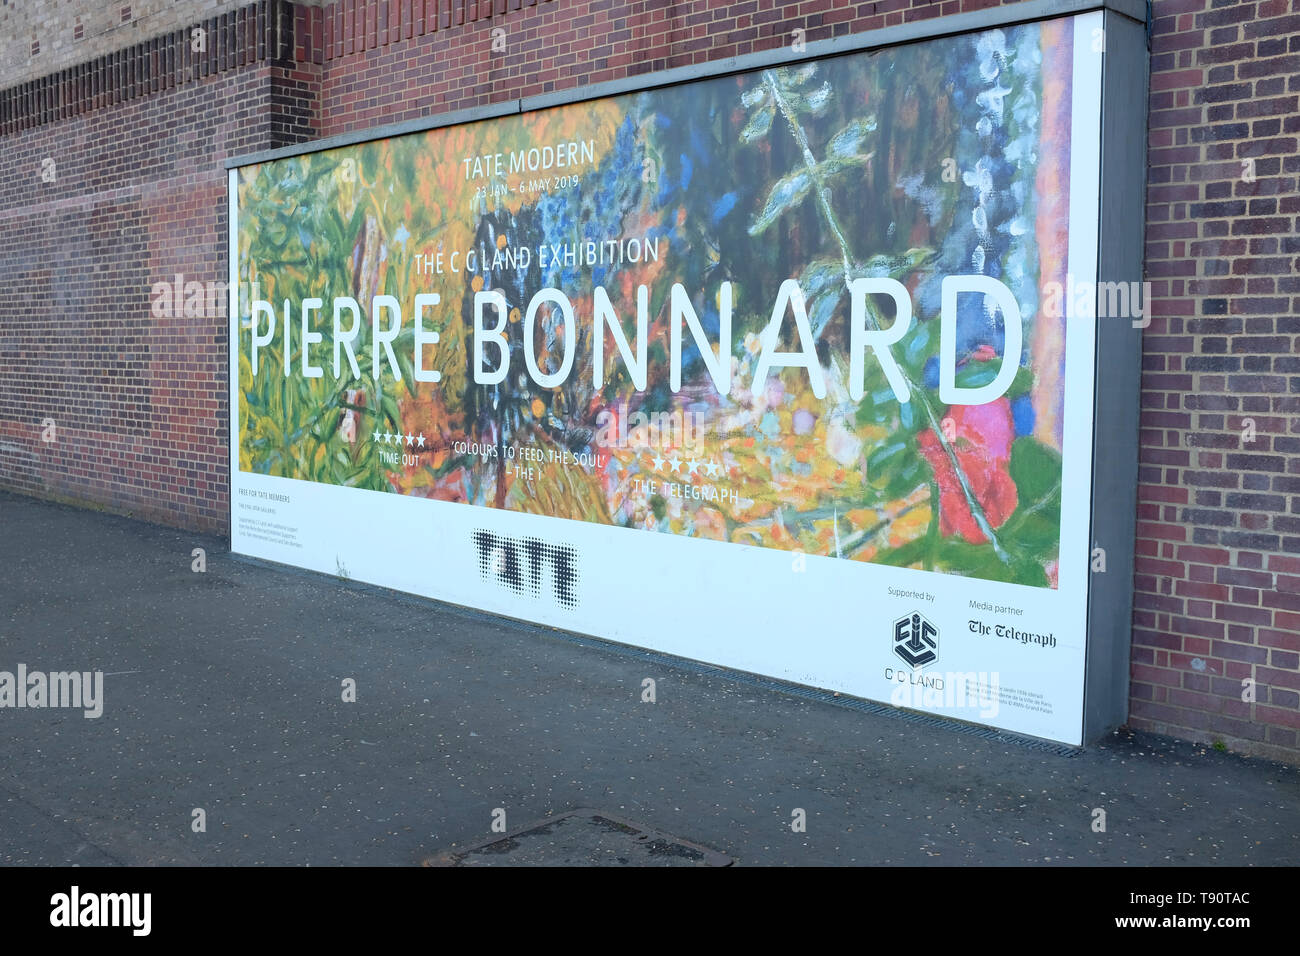 Artist Pierre Bonnard at the Tate, London, UK. Stock Photo